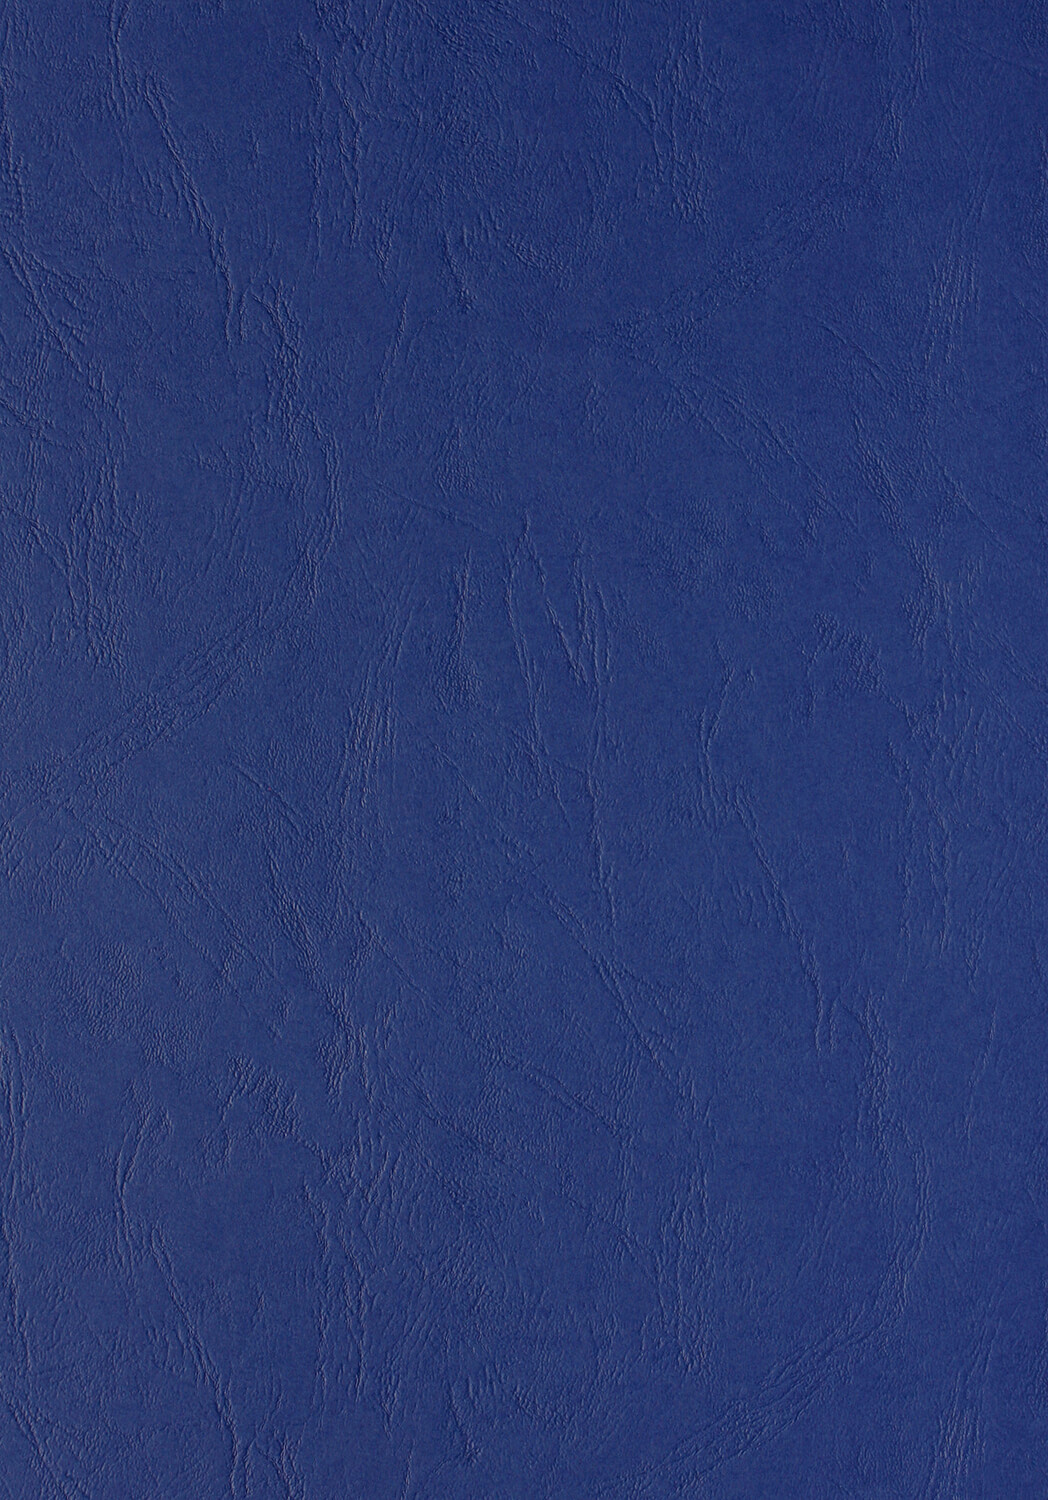 Clairefontaine 240g A4 ledergenarbt dunkelblau 2764 | Bestnr. UMBR240-2764